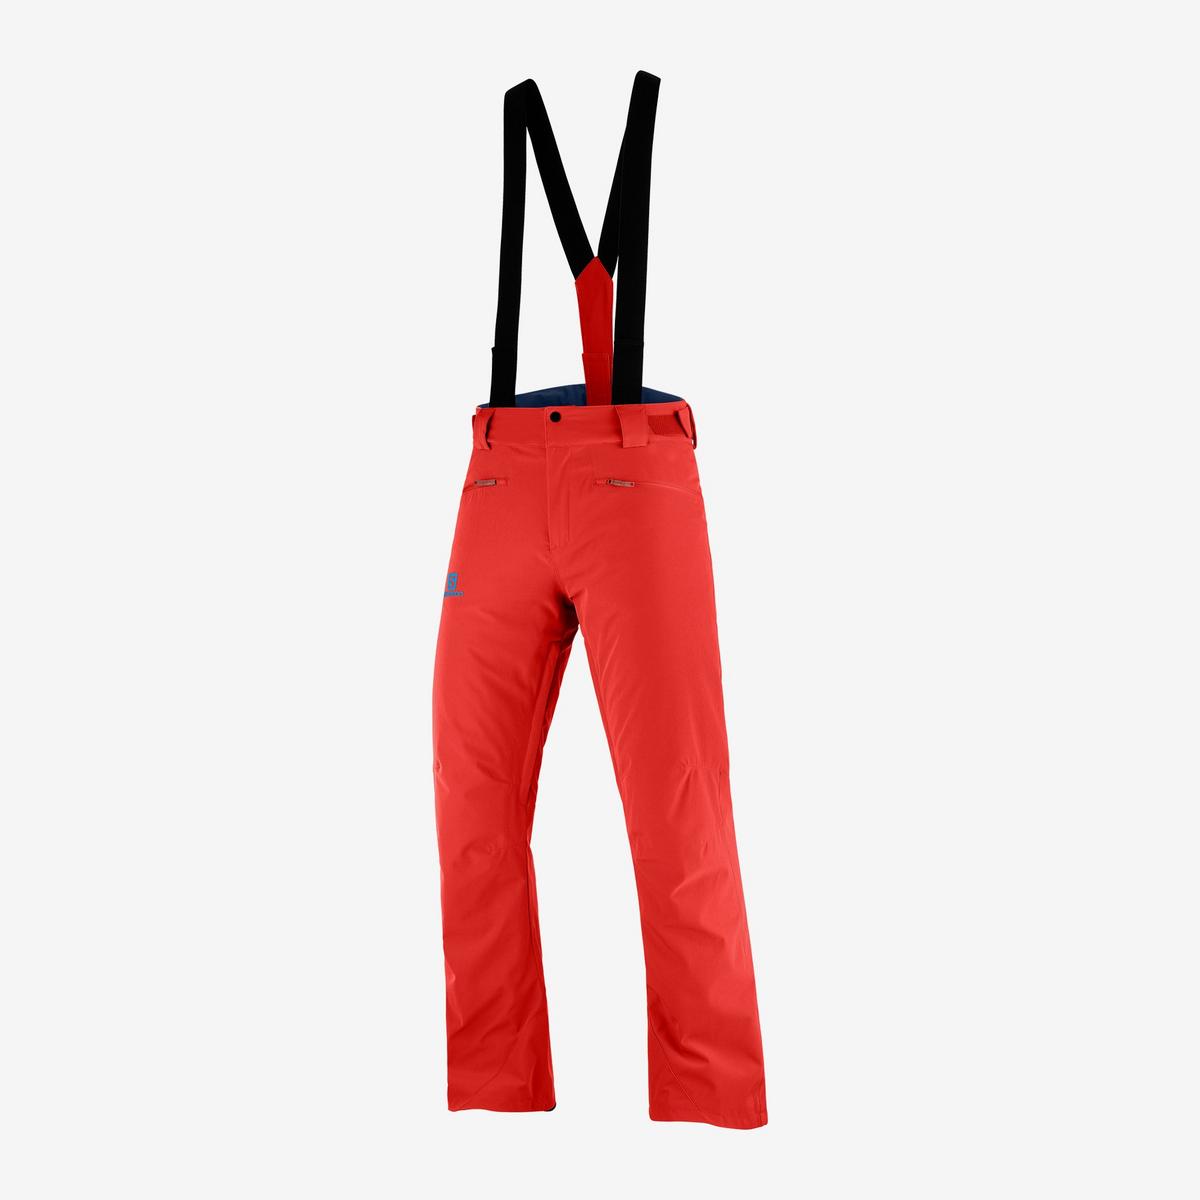 Salomon Men's Stance Pant - Red